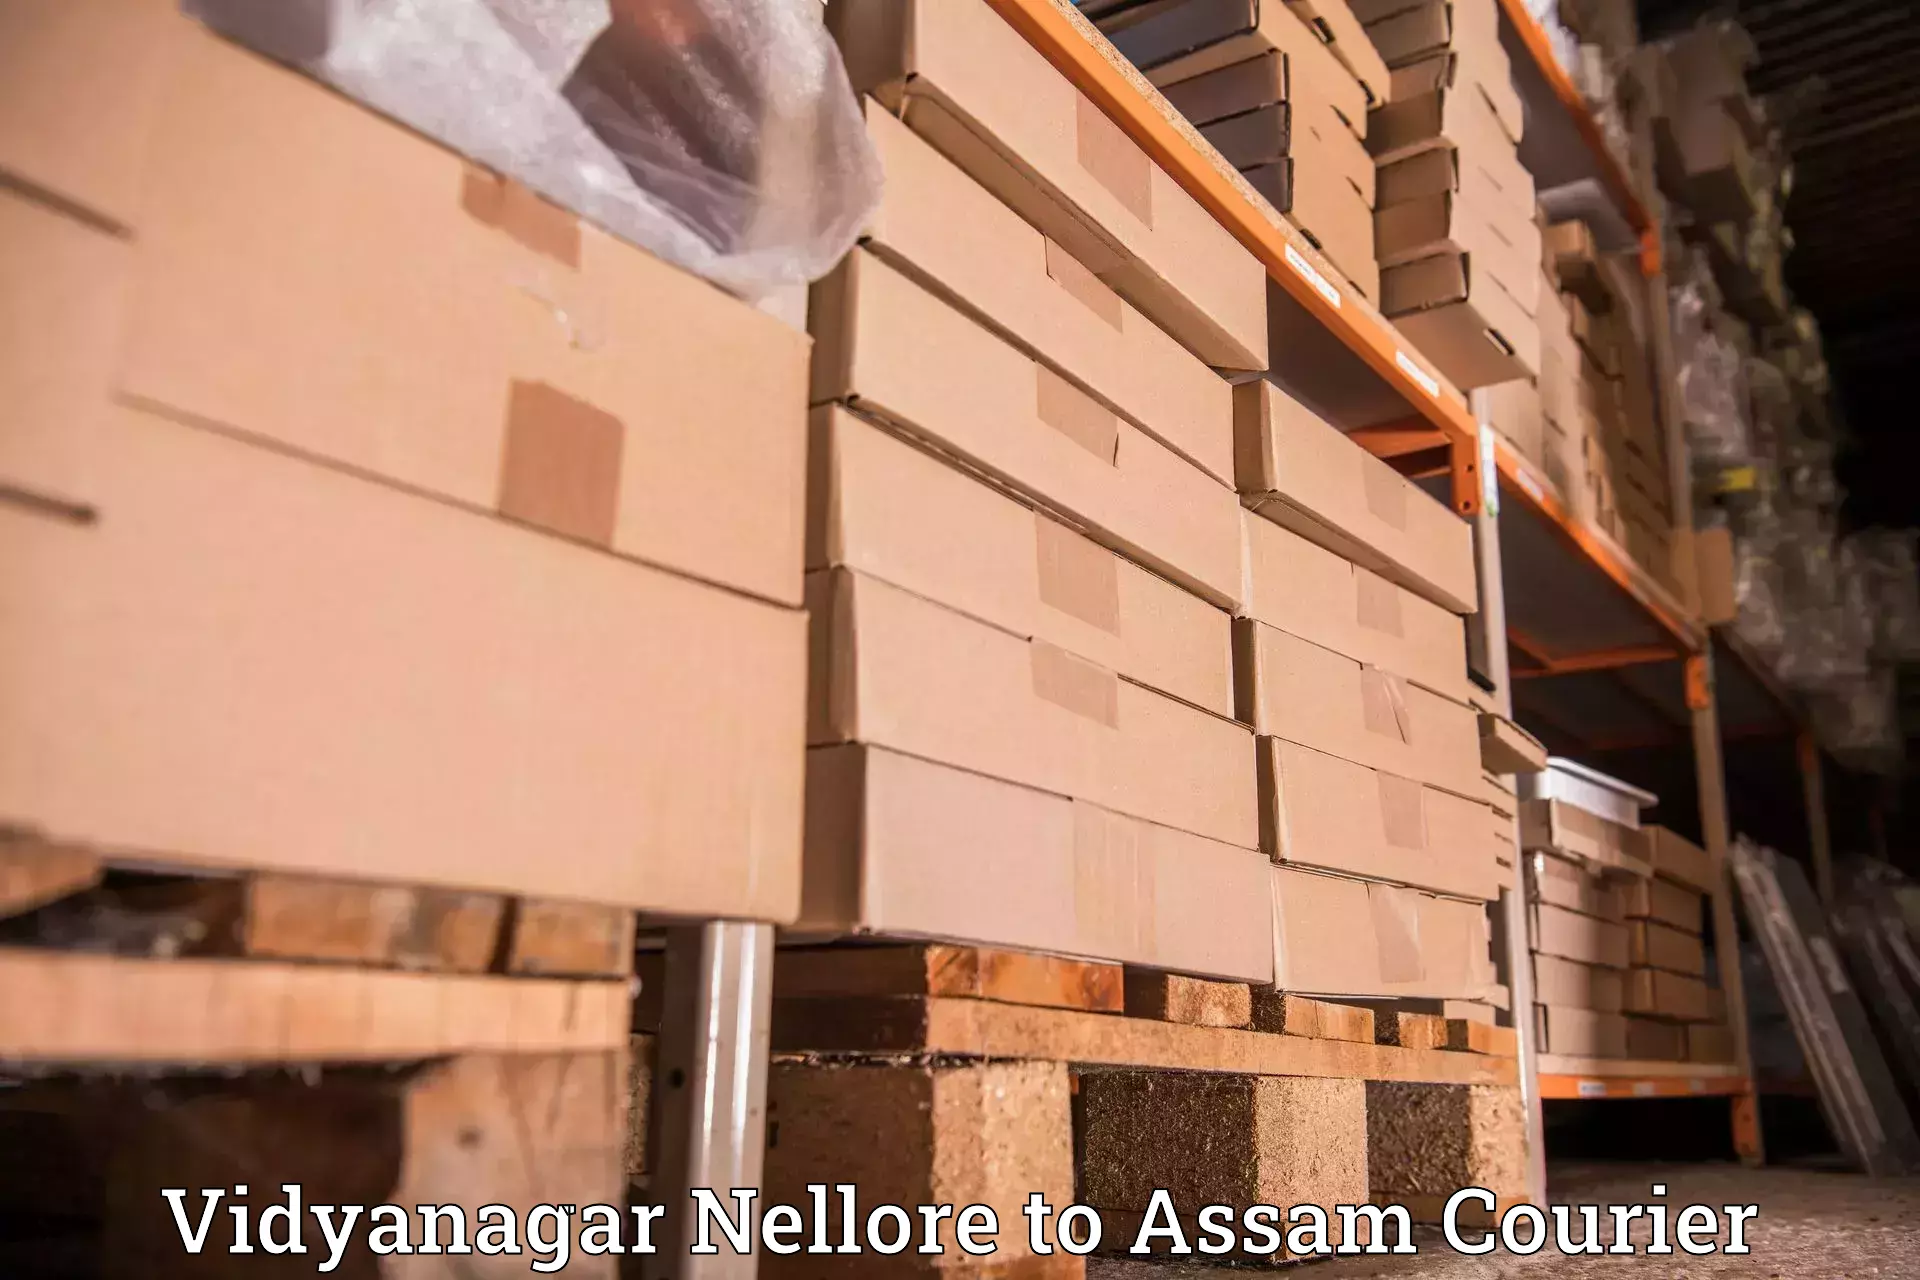 Global courier networks Vidyanagar Nellore to Assam